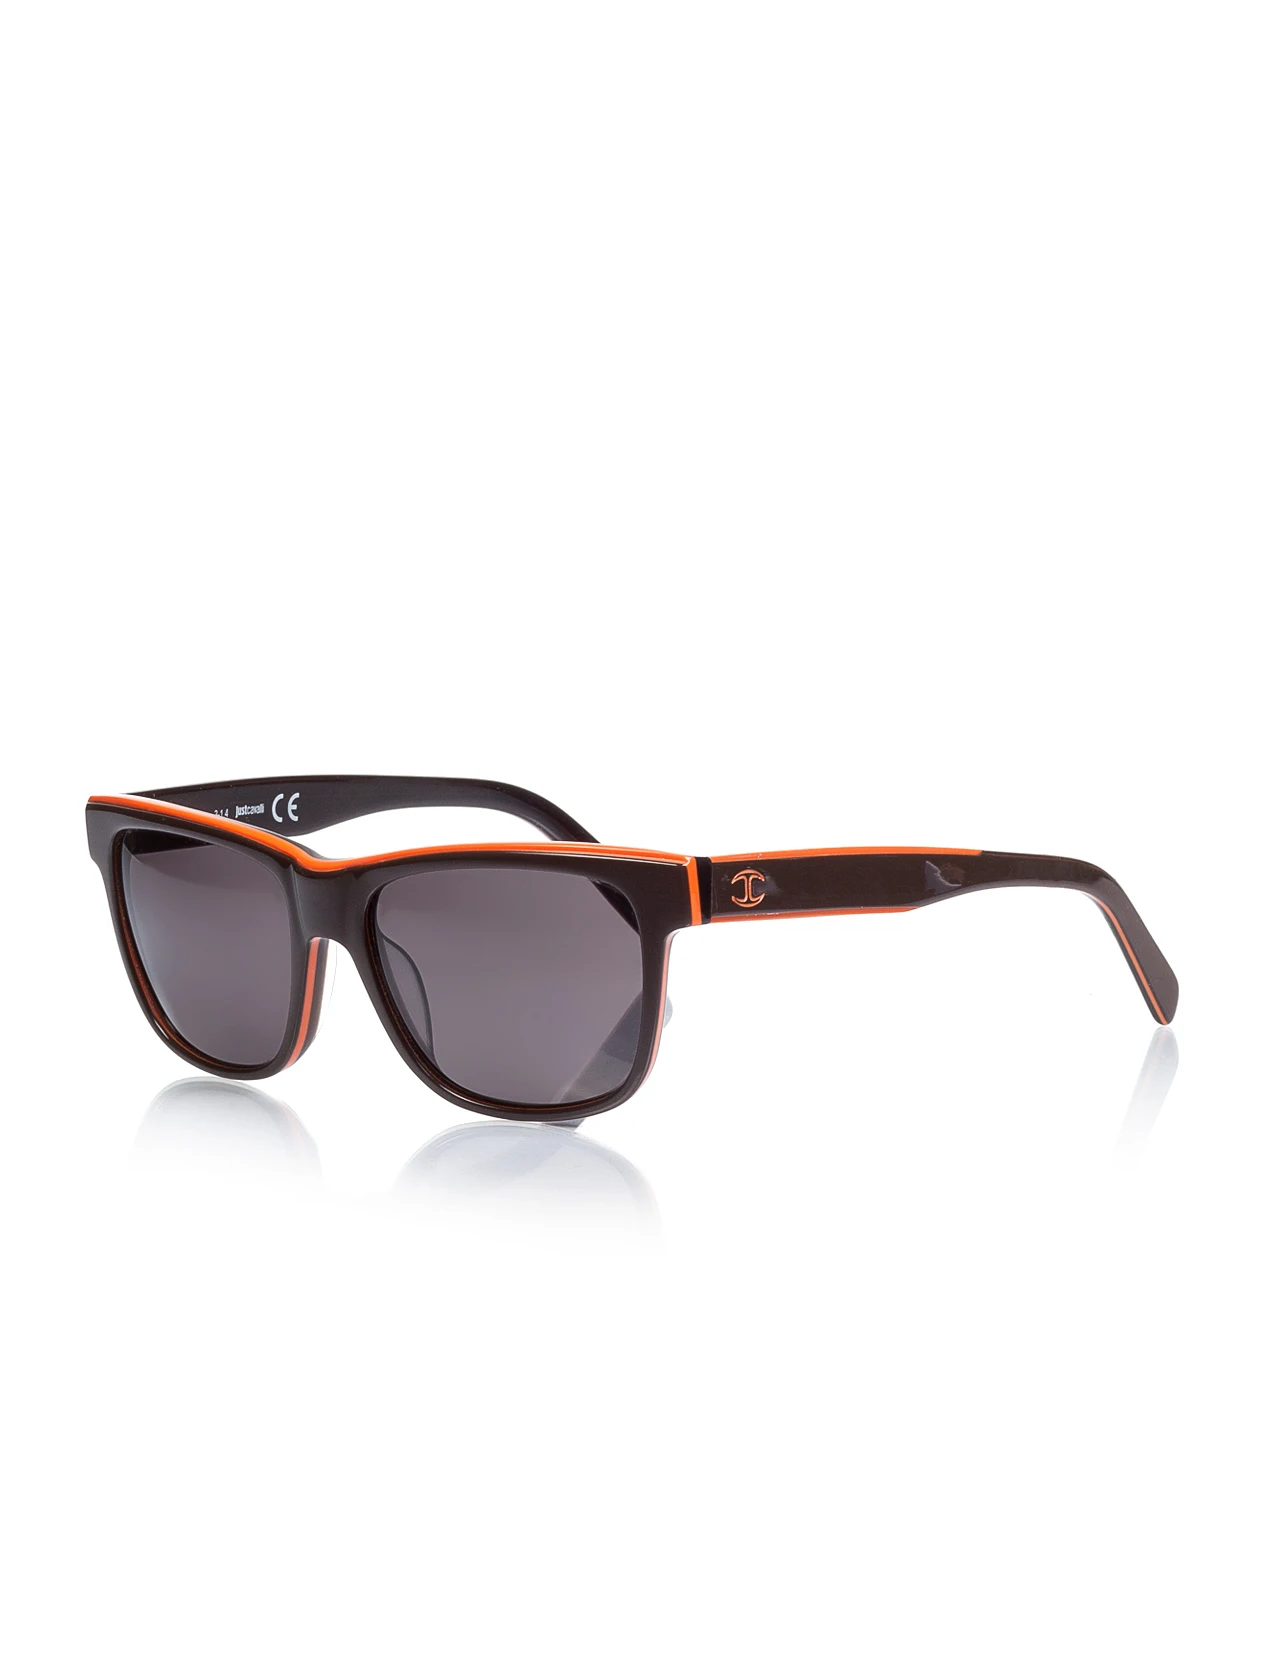 

Unisex sunglasses jc 641 50a bone Brown organic square square 53-16-145 just cavalli